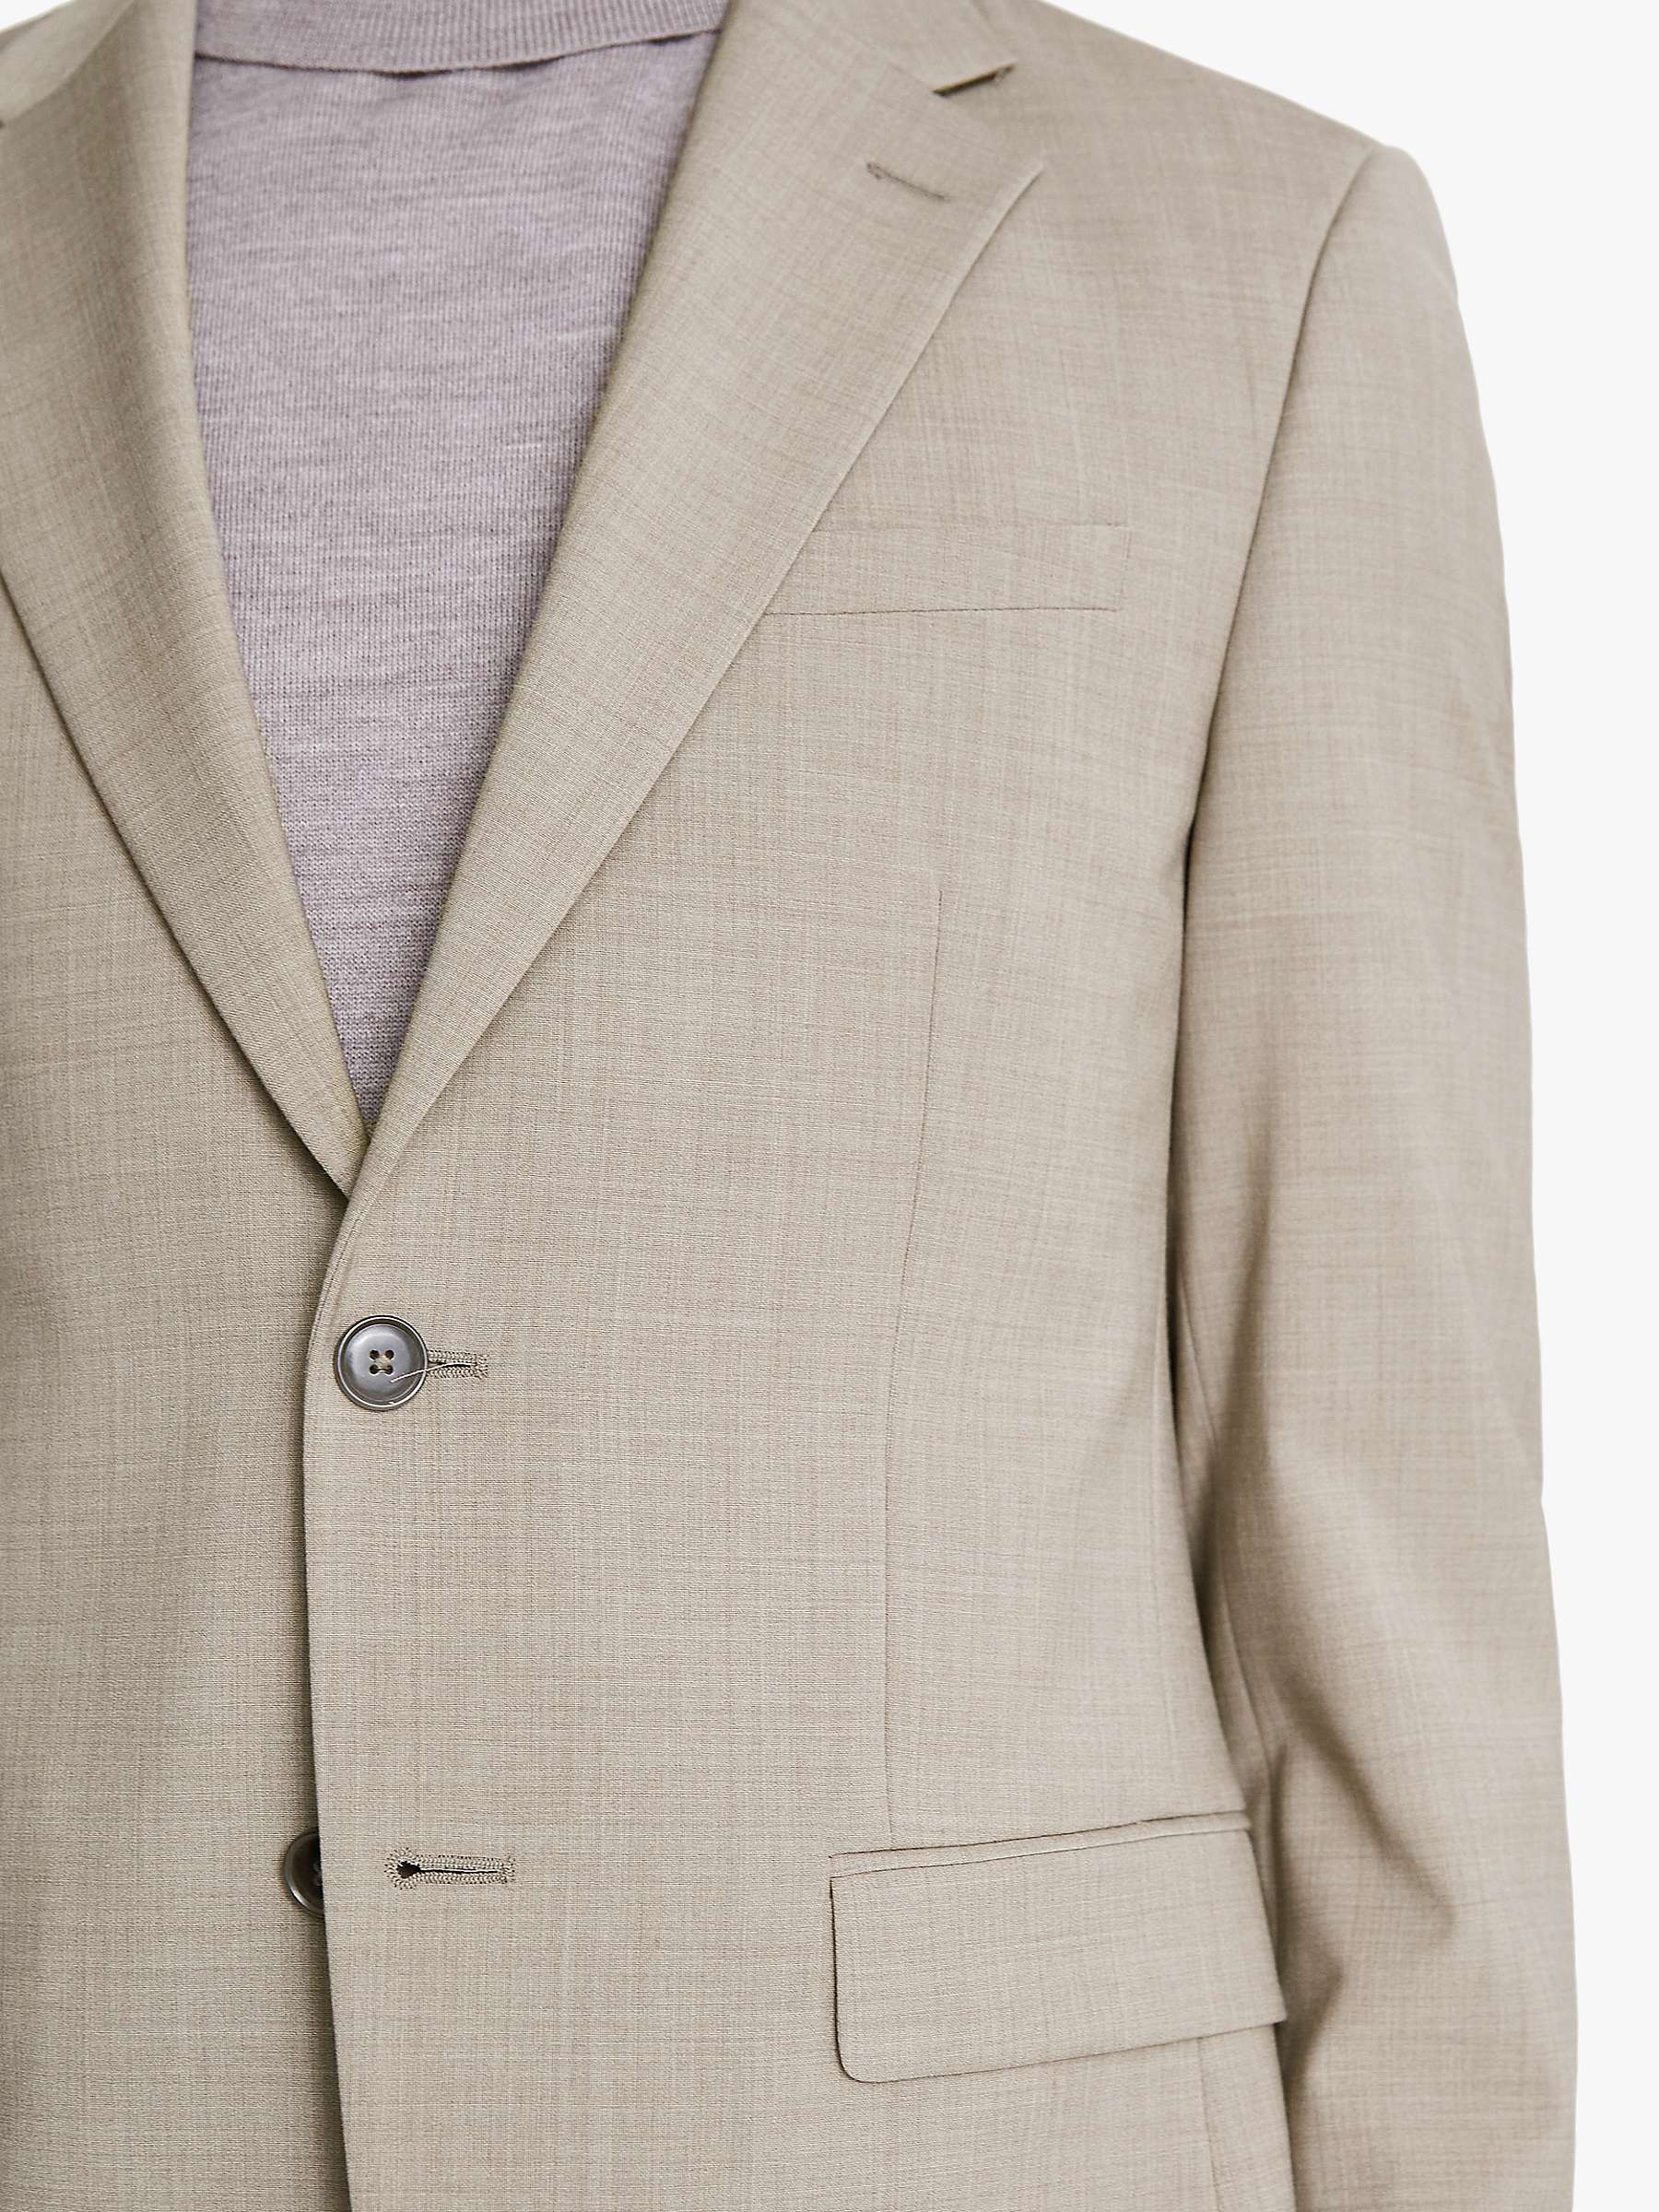 DKNY Slim Fit Wool Blend Suit Jacket, Taupe at John Lewis & Partners